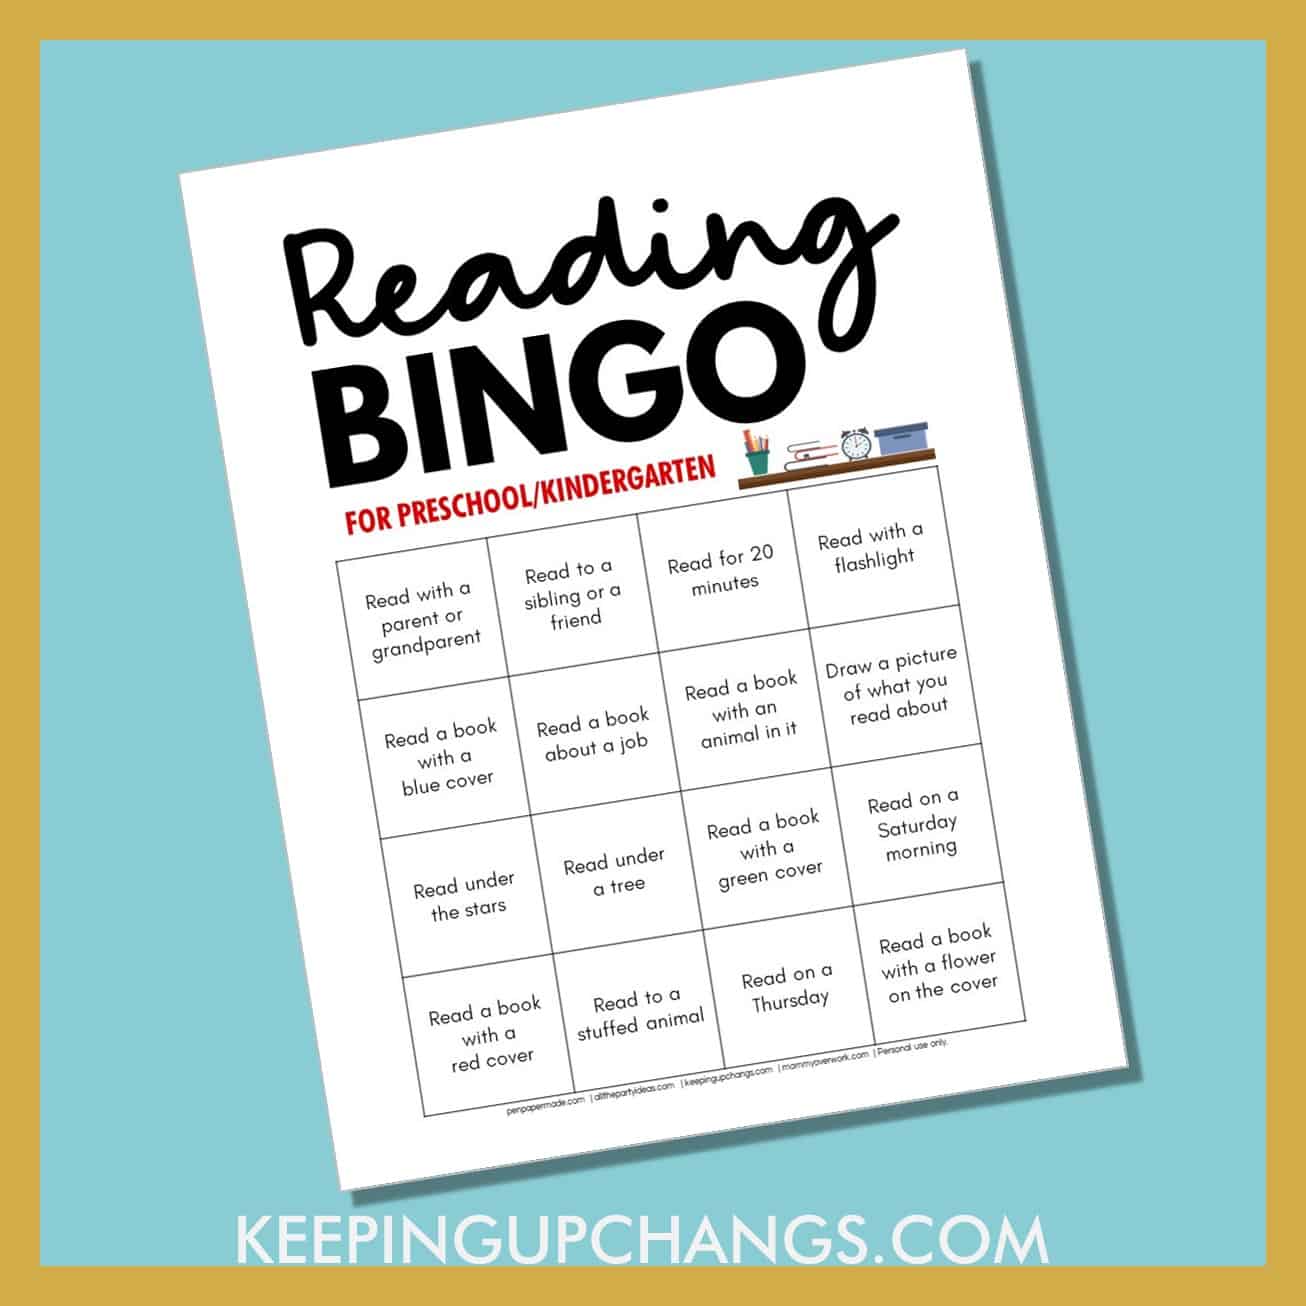 preschool or kindergarten reading bingo challenge with fun ways to enjoy reading.